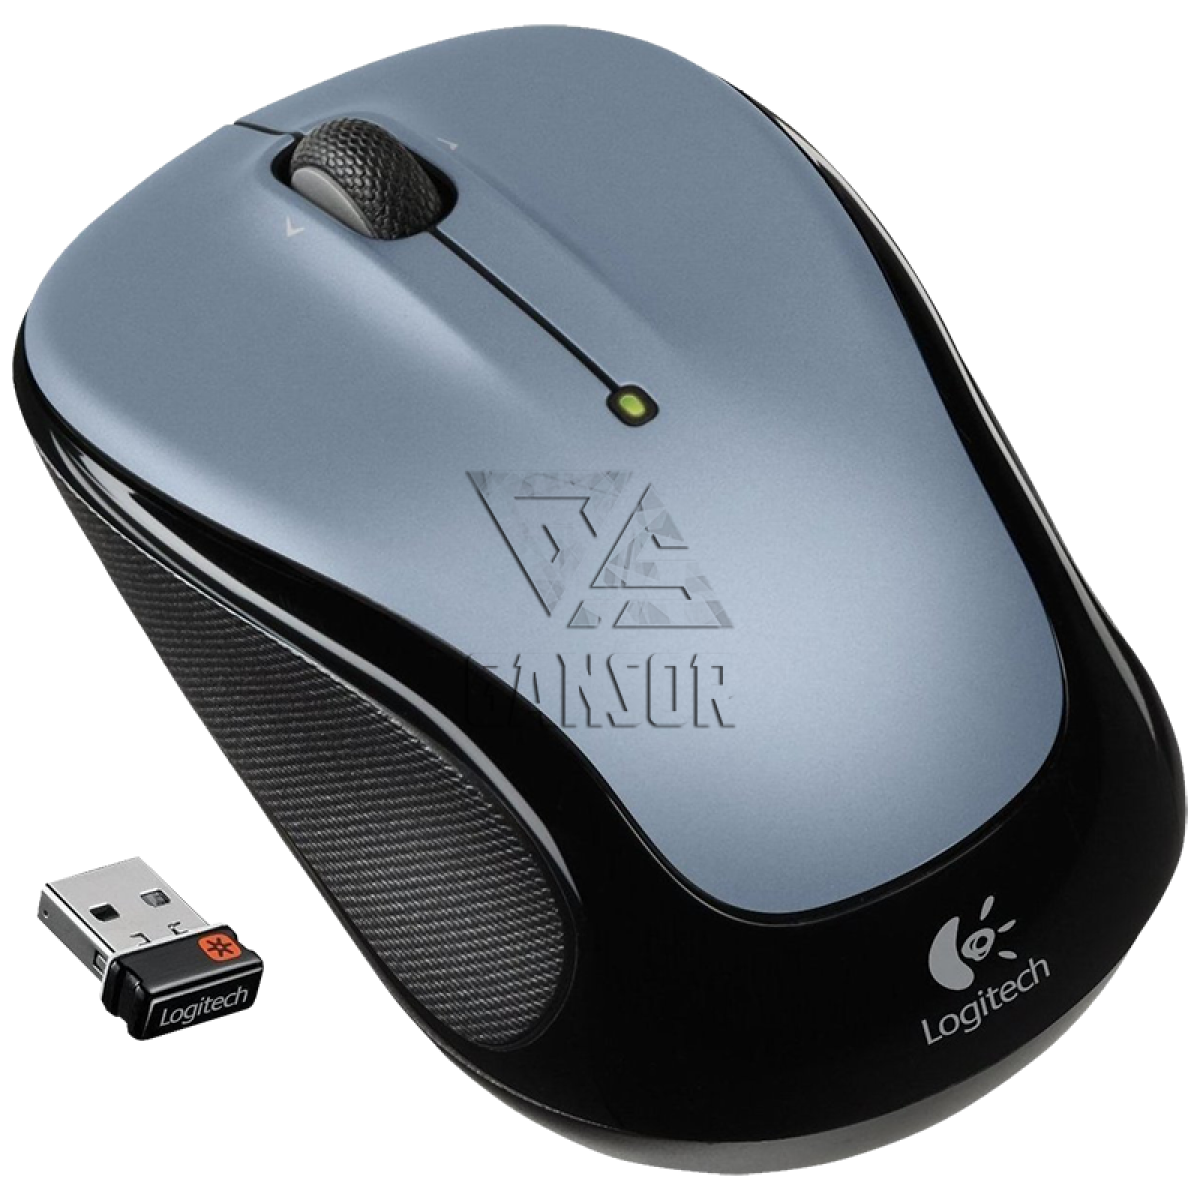 Беспроводные мыши москве. Logitech Wireless Mouse m325. Logitech беспроводная мышь ь325. Logitech m325 Limited. Мышь беспроводная Logitech m325 Dark Silver.